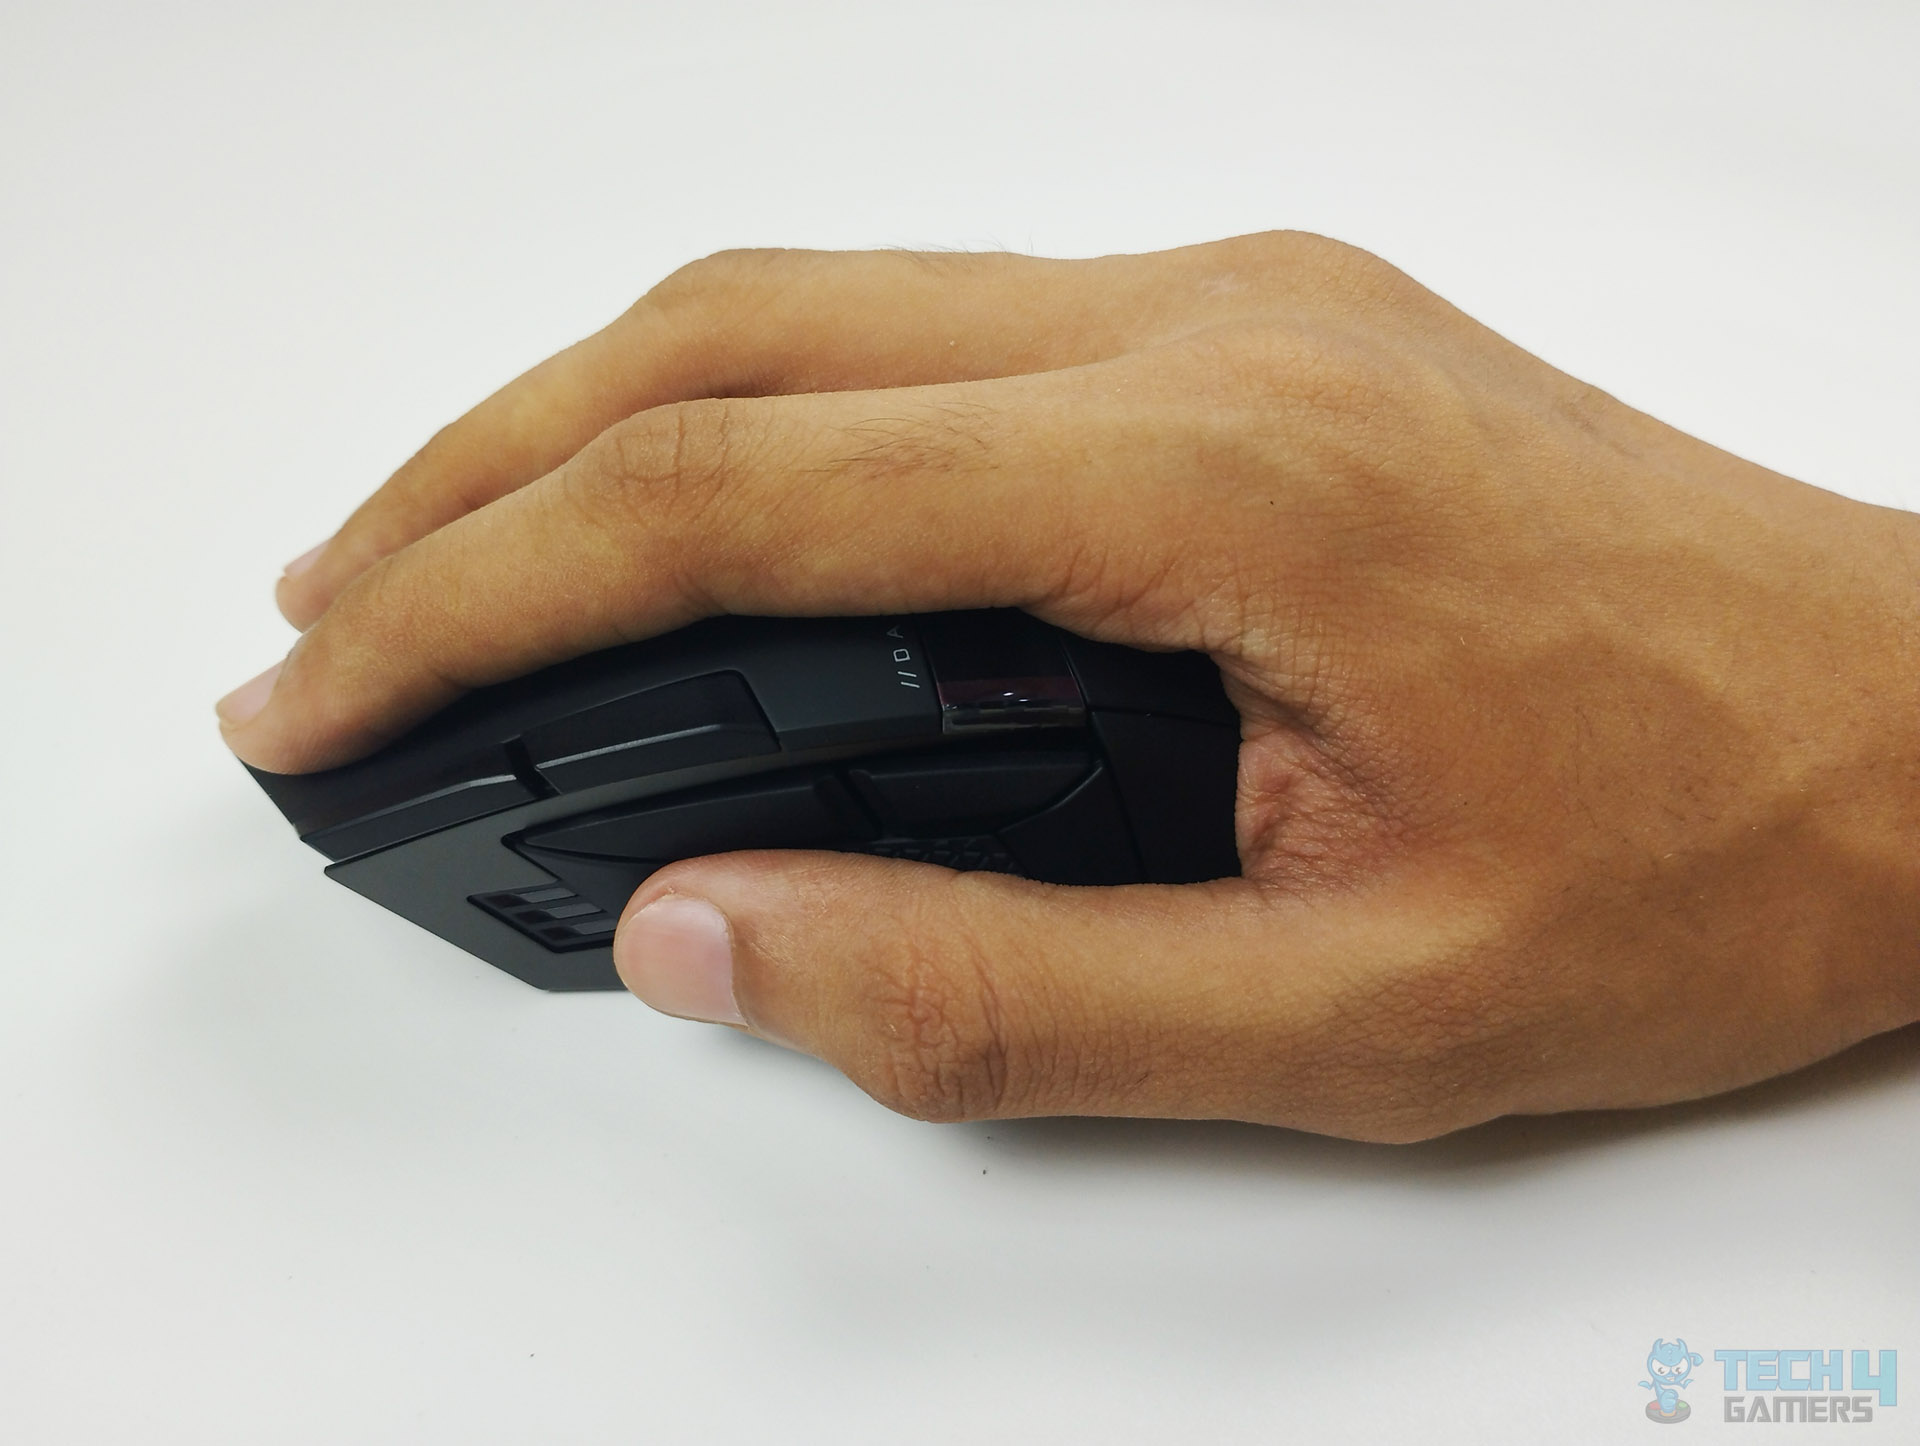 Corsair Darkstar Wireless Review - Palm Grip